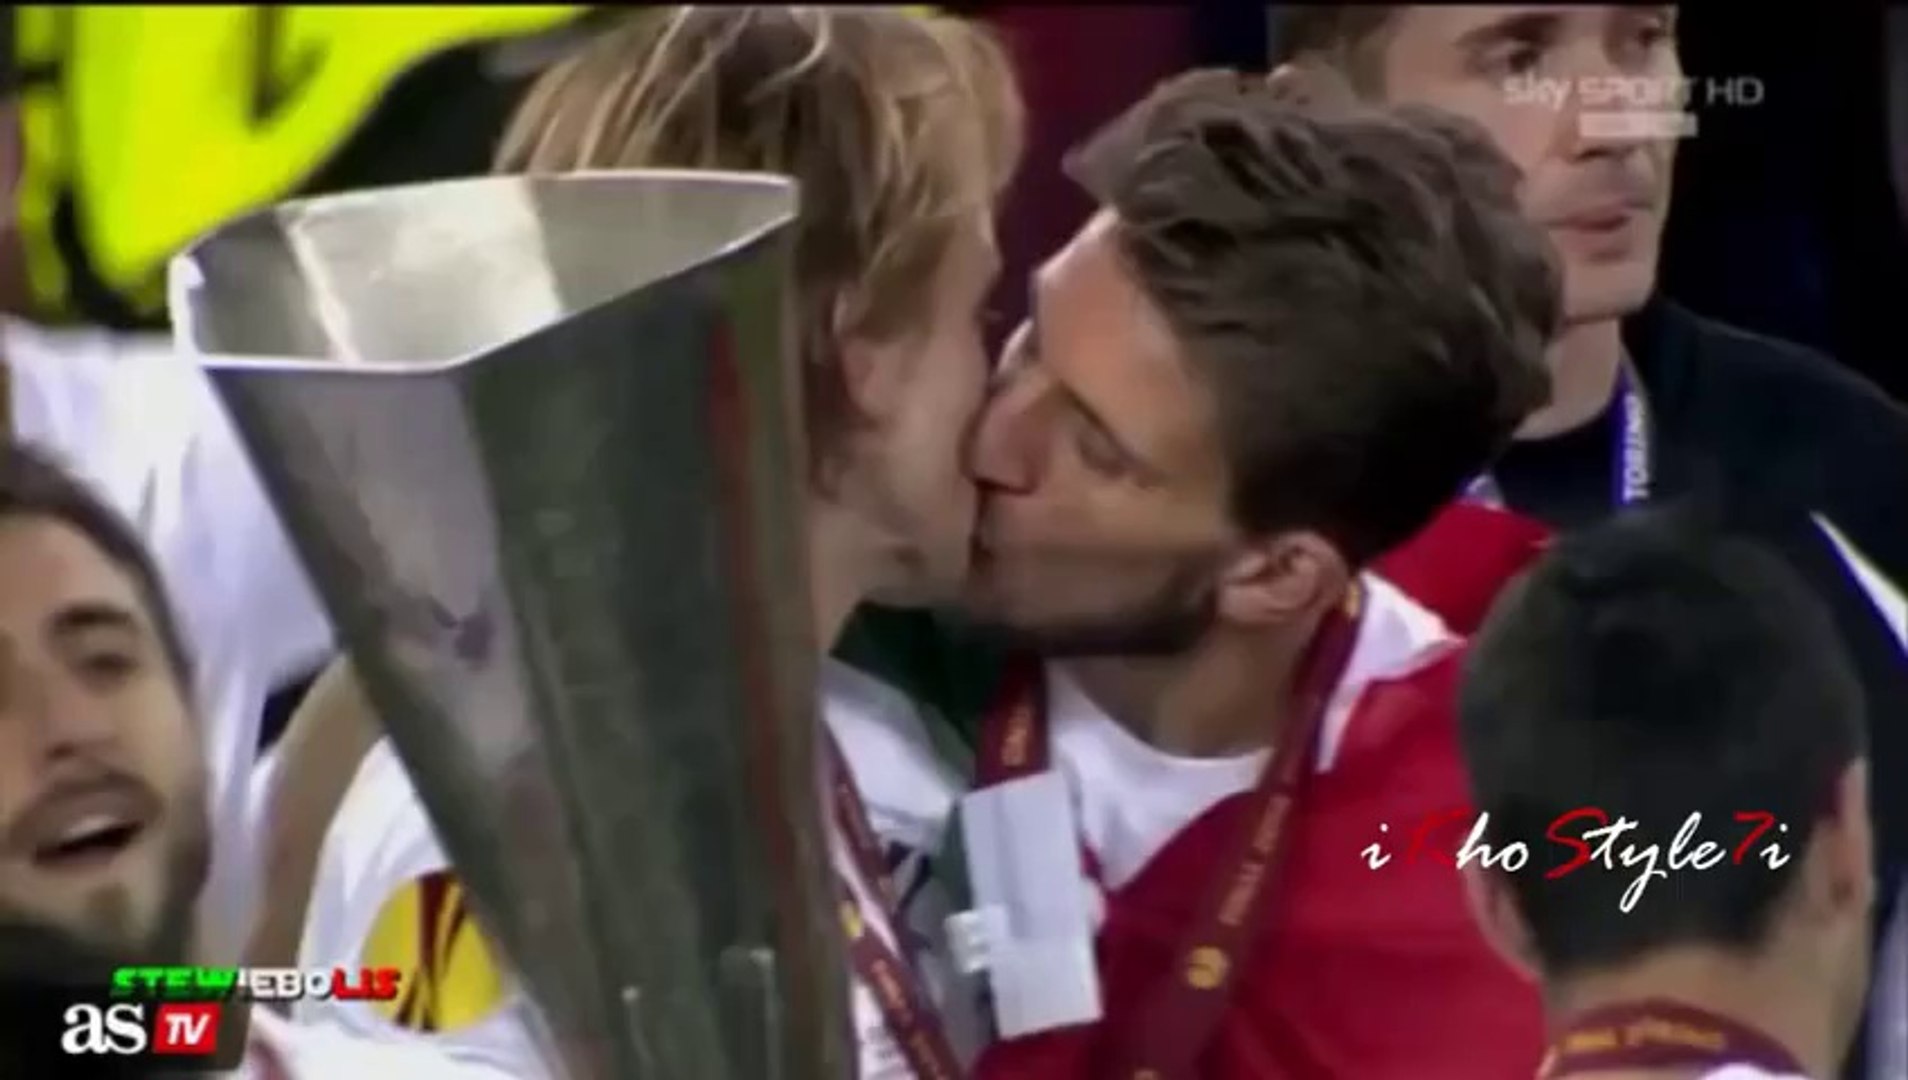 FULL VIDEO The kiss between Rakitic & Carriço - during the Europa League  FINAL 2014 - video Dailymotion